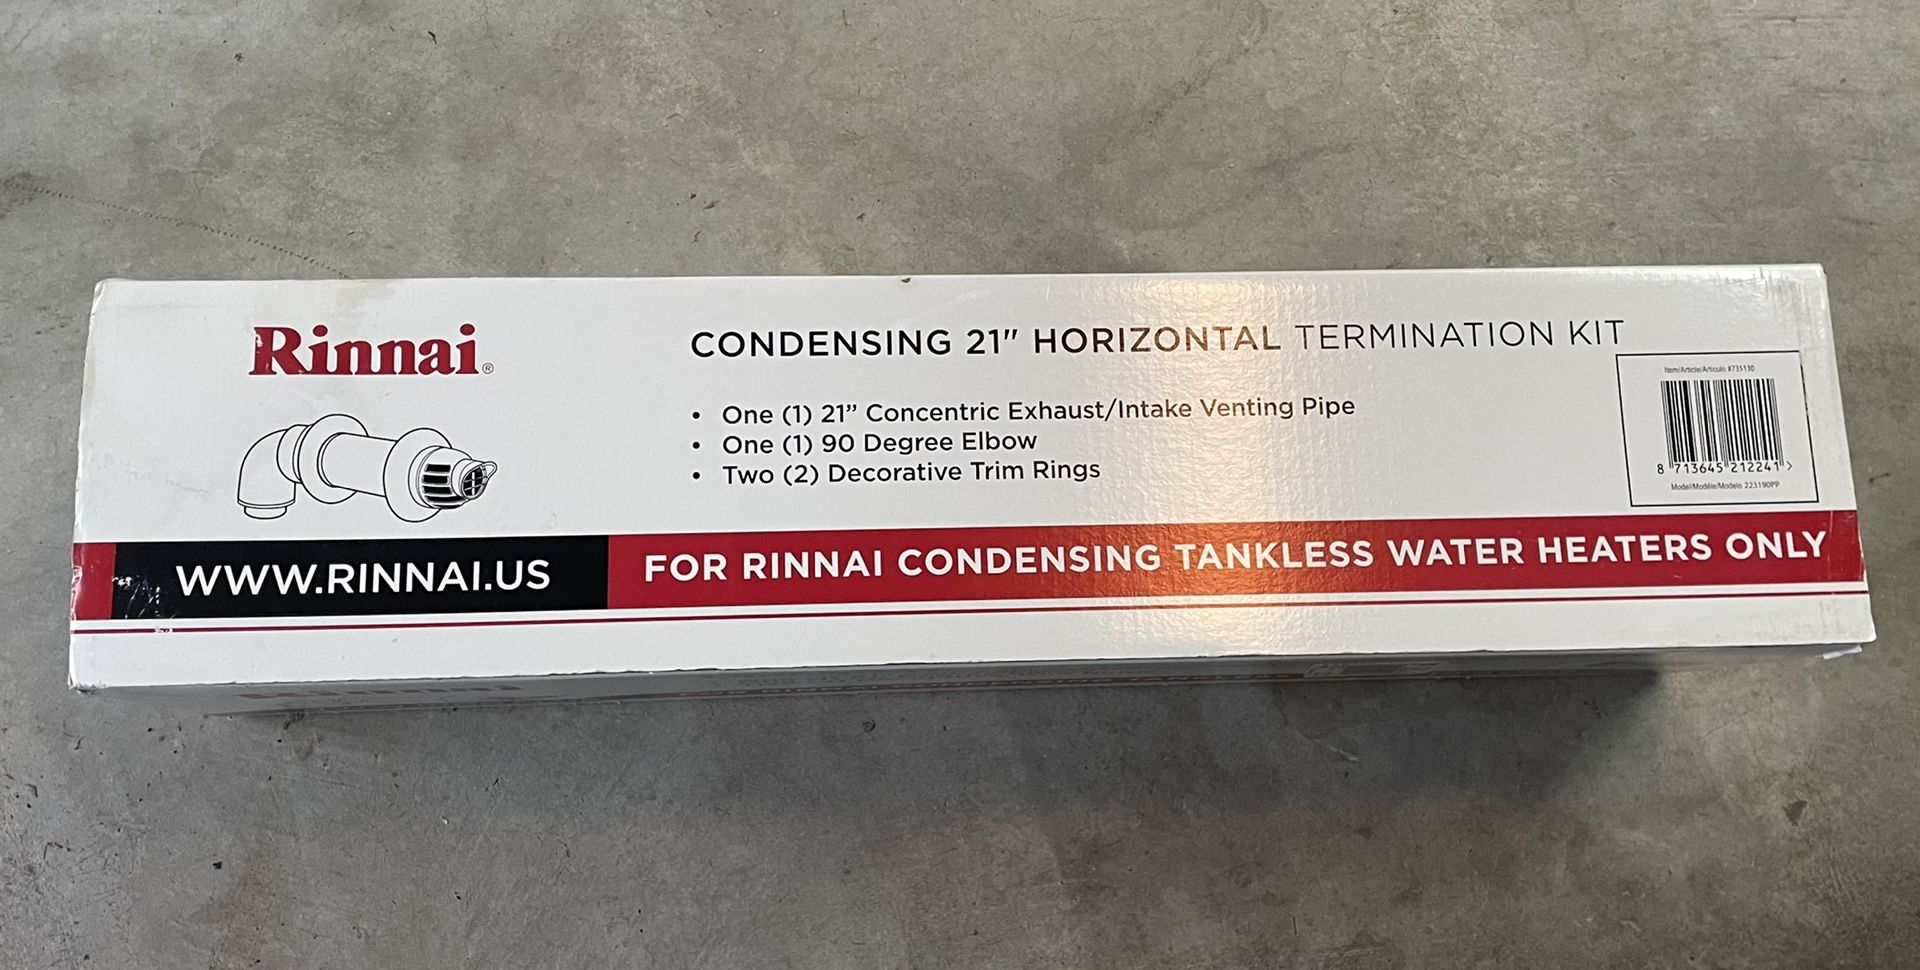 Rinnai 21" condensing horizontal termination kit stores